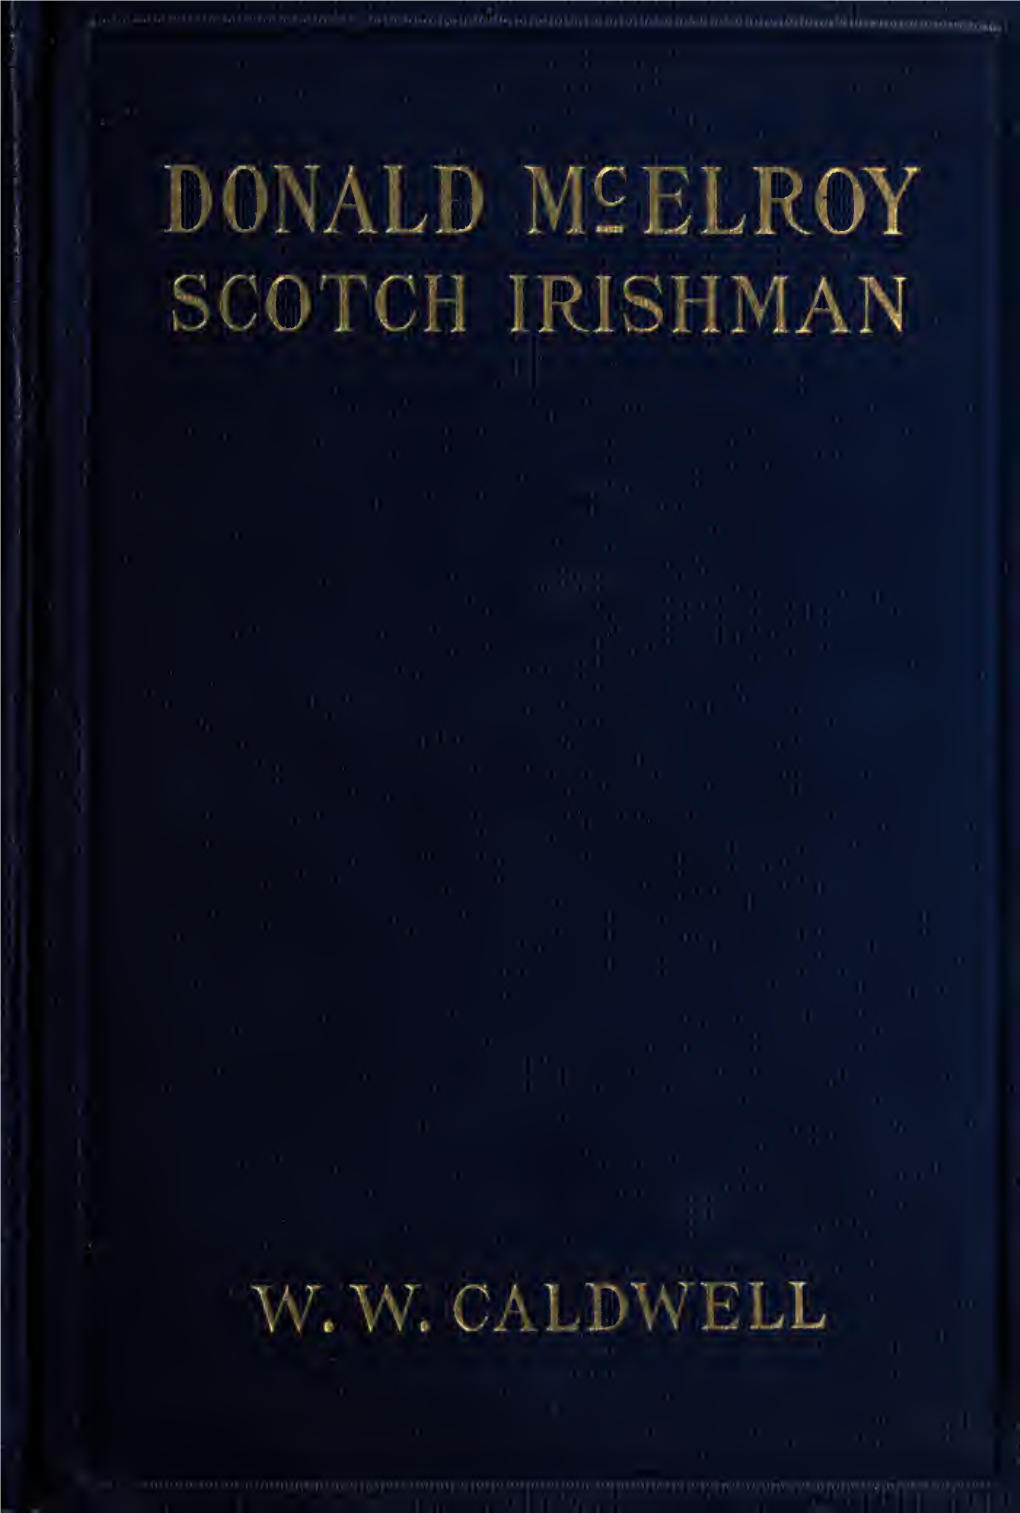 Donald Mcelroy, Scotch Irishman